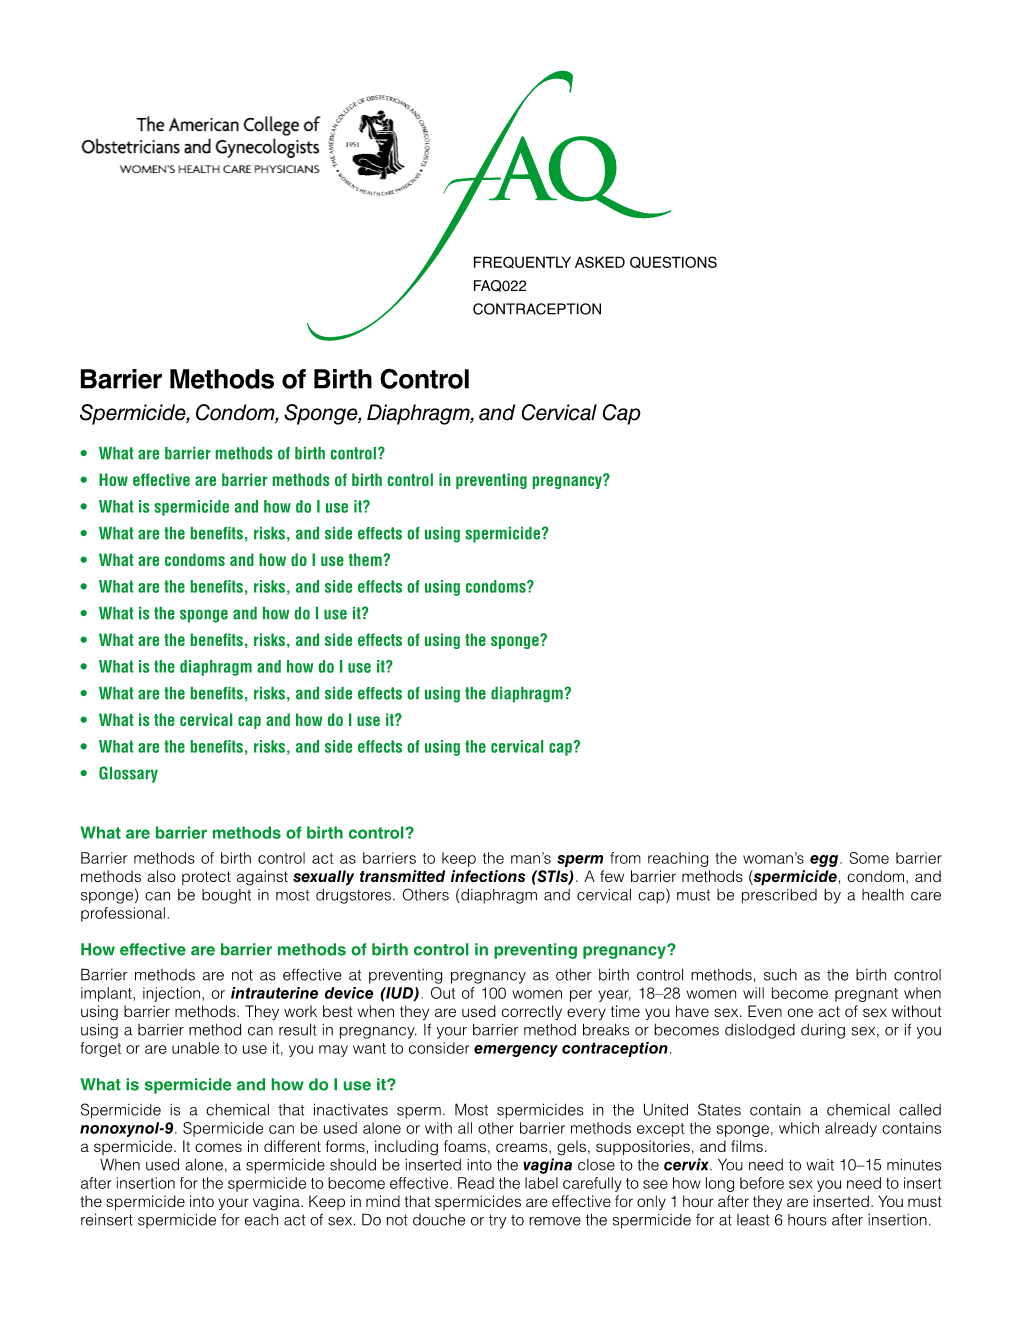 Barrier Methods of Birth Control Spermicide, Condom, Sponge, Diaphragm, and Cervical Cap